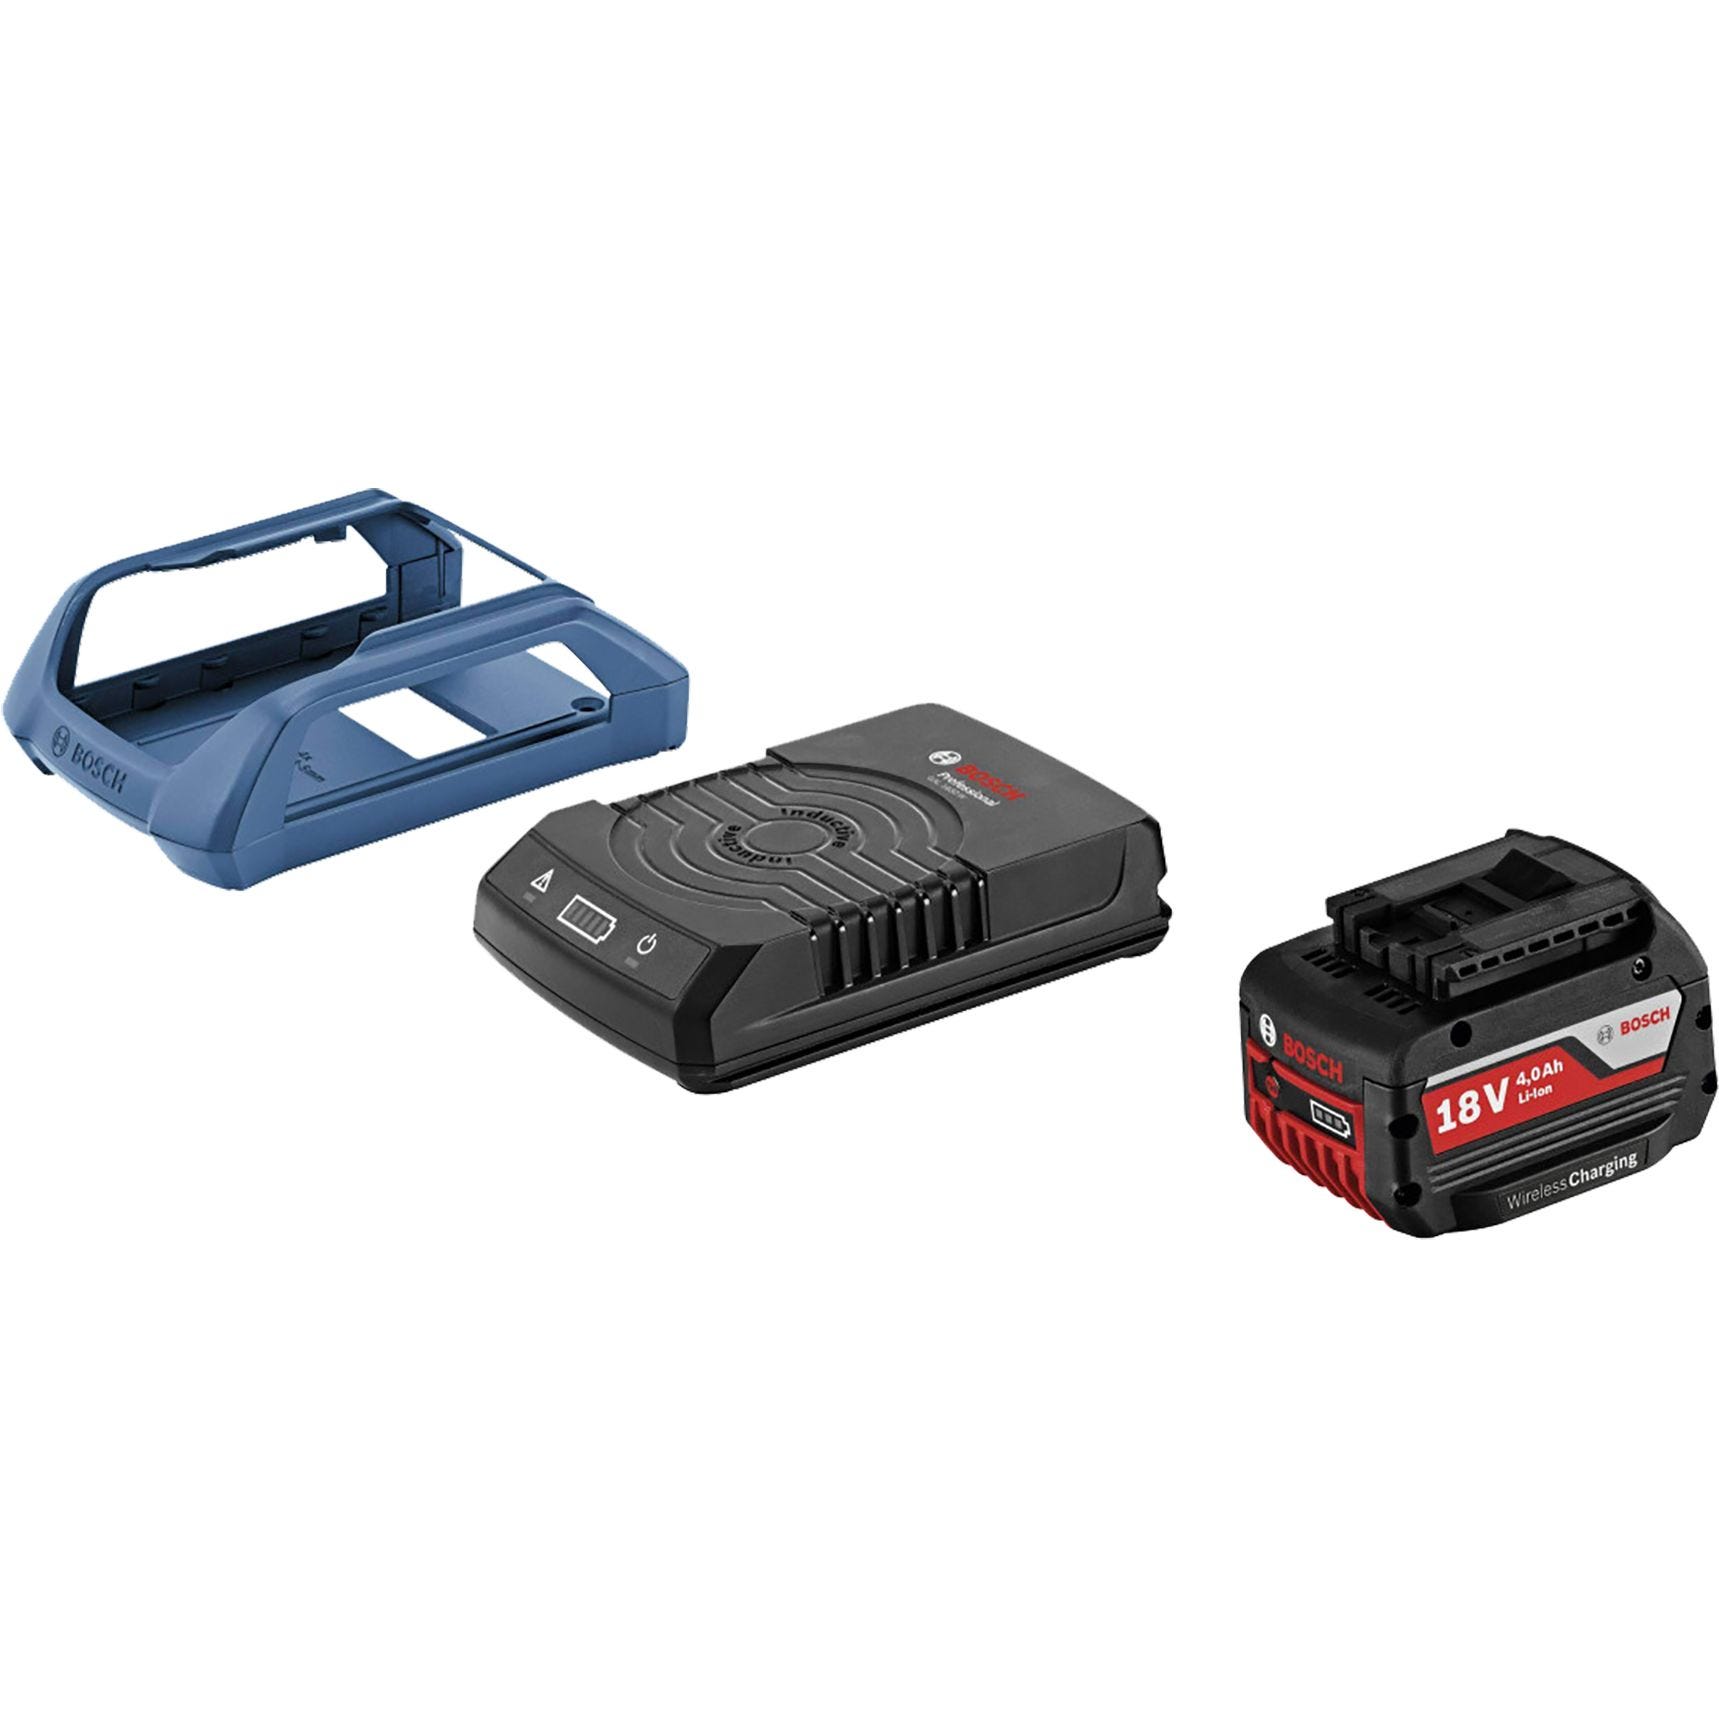 Pack à induction 18V GBA 1 batterie 2AH + chargeur GAL 1830W en boite carton - BOSCH - 1600A003NA 0